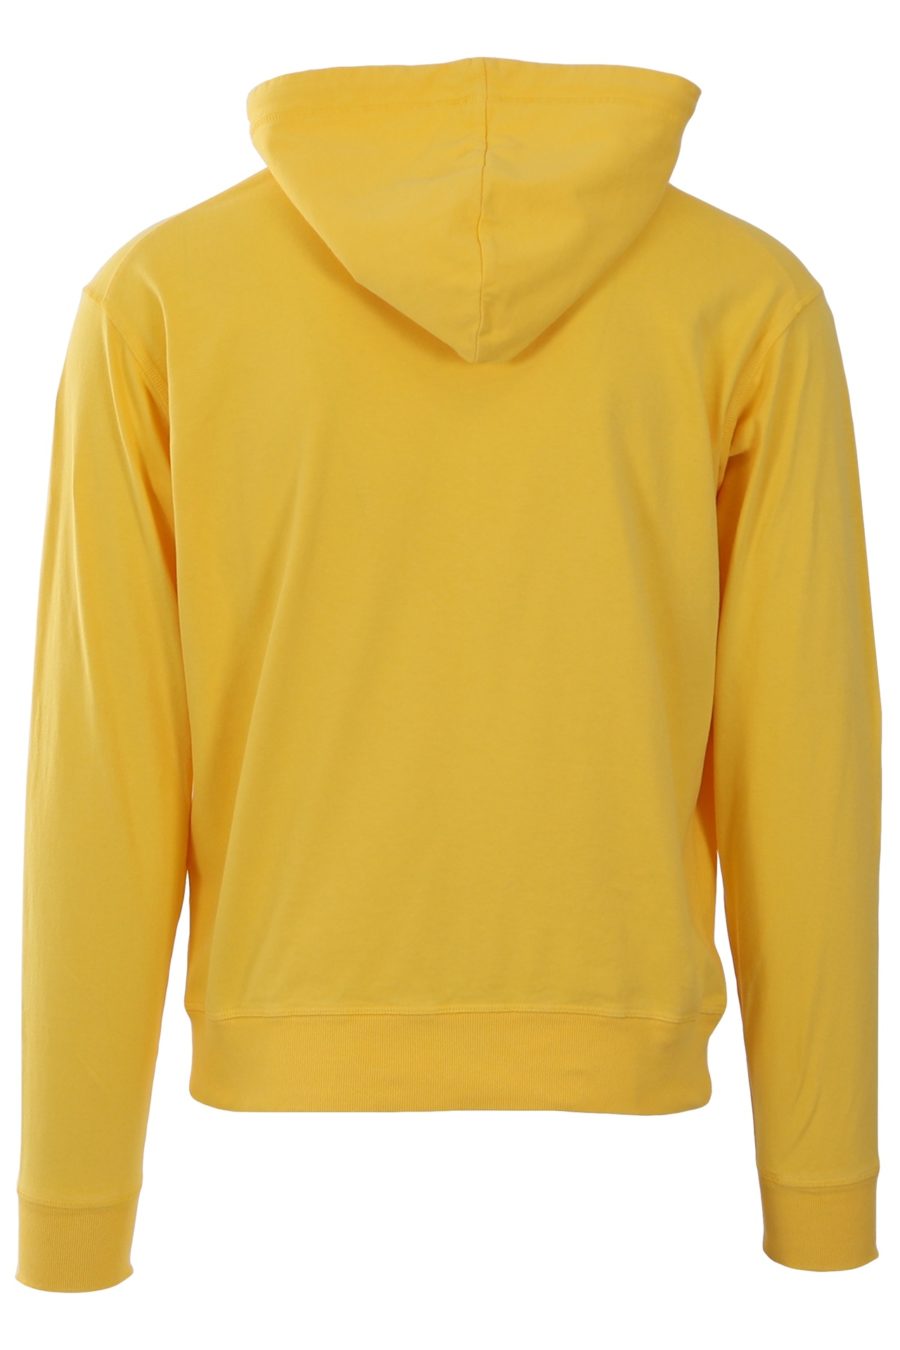 Sweatshirt Dsquared2 gelb mit rotem Logo - 378bae3ff4b120a6e311470a2992dd81de0d0ce2